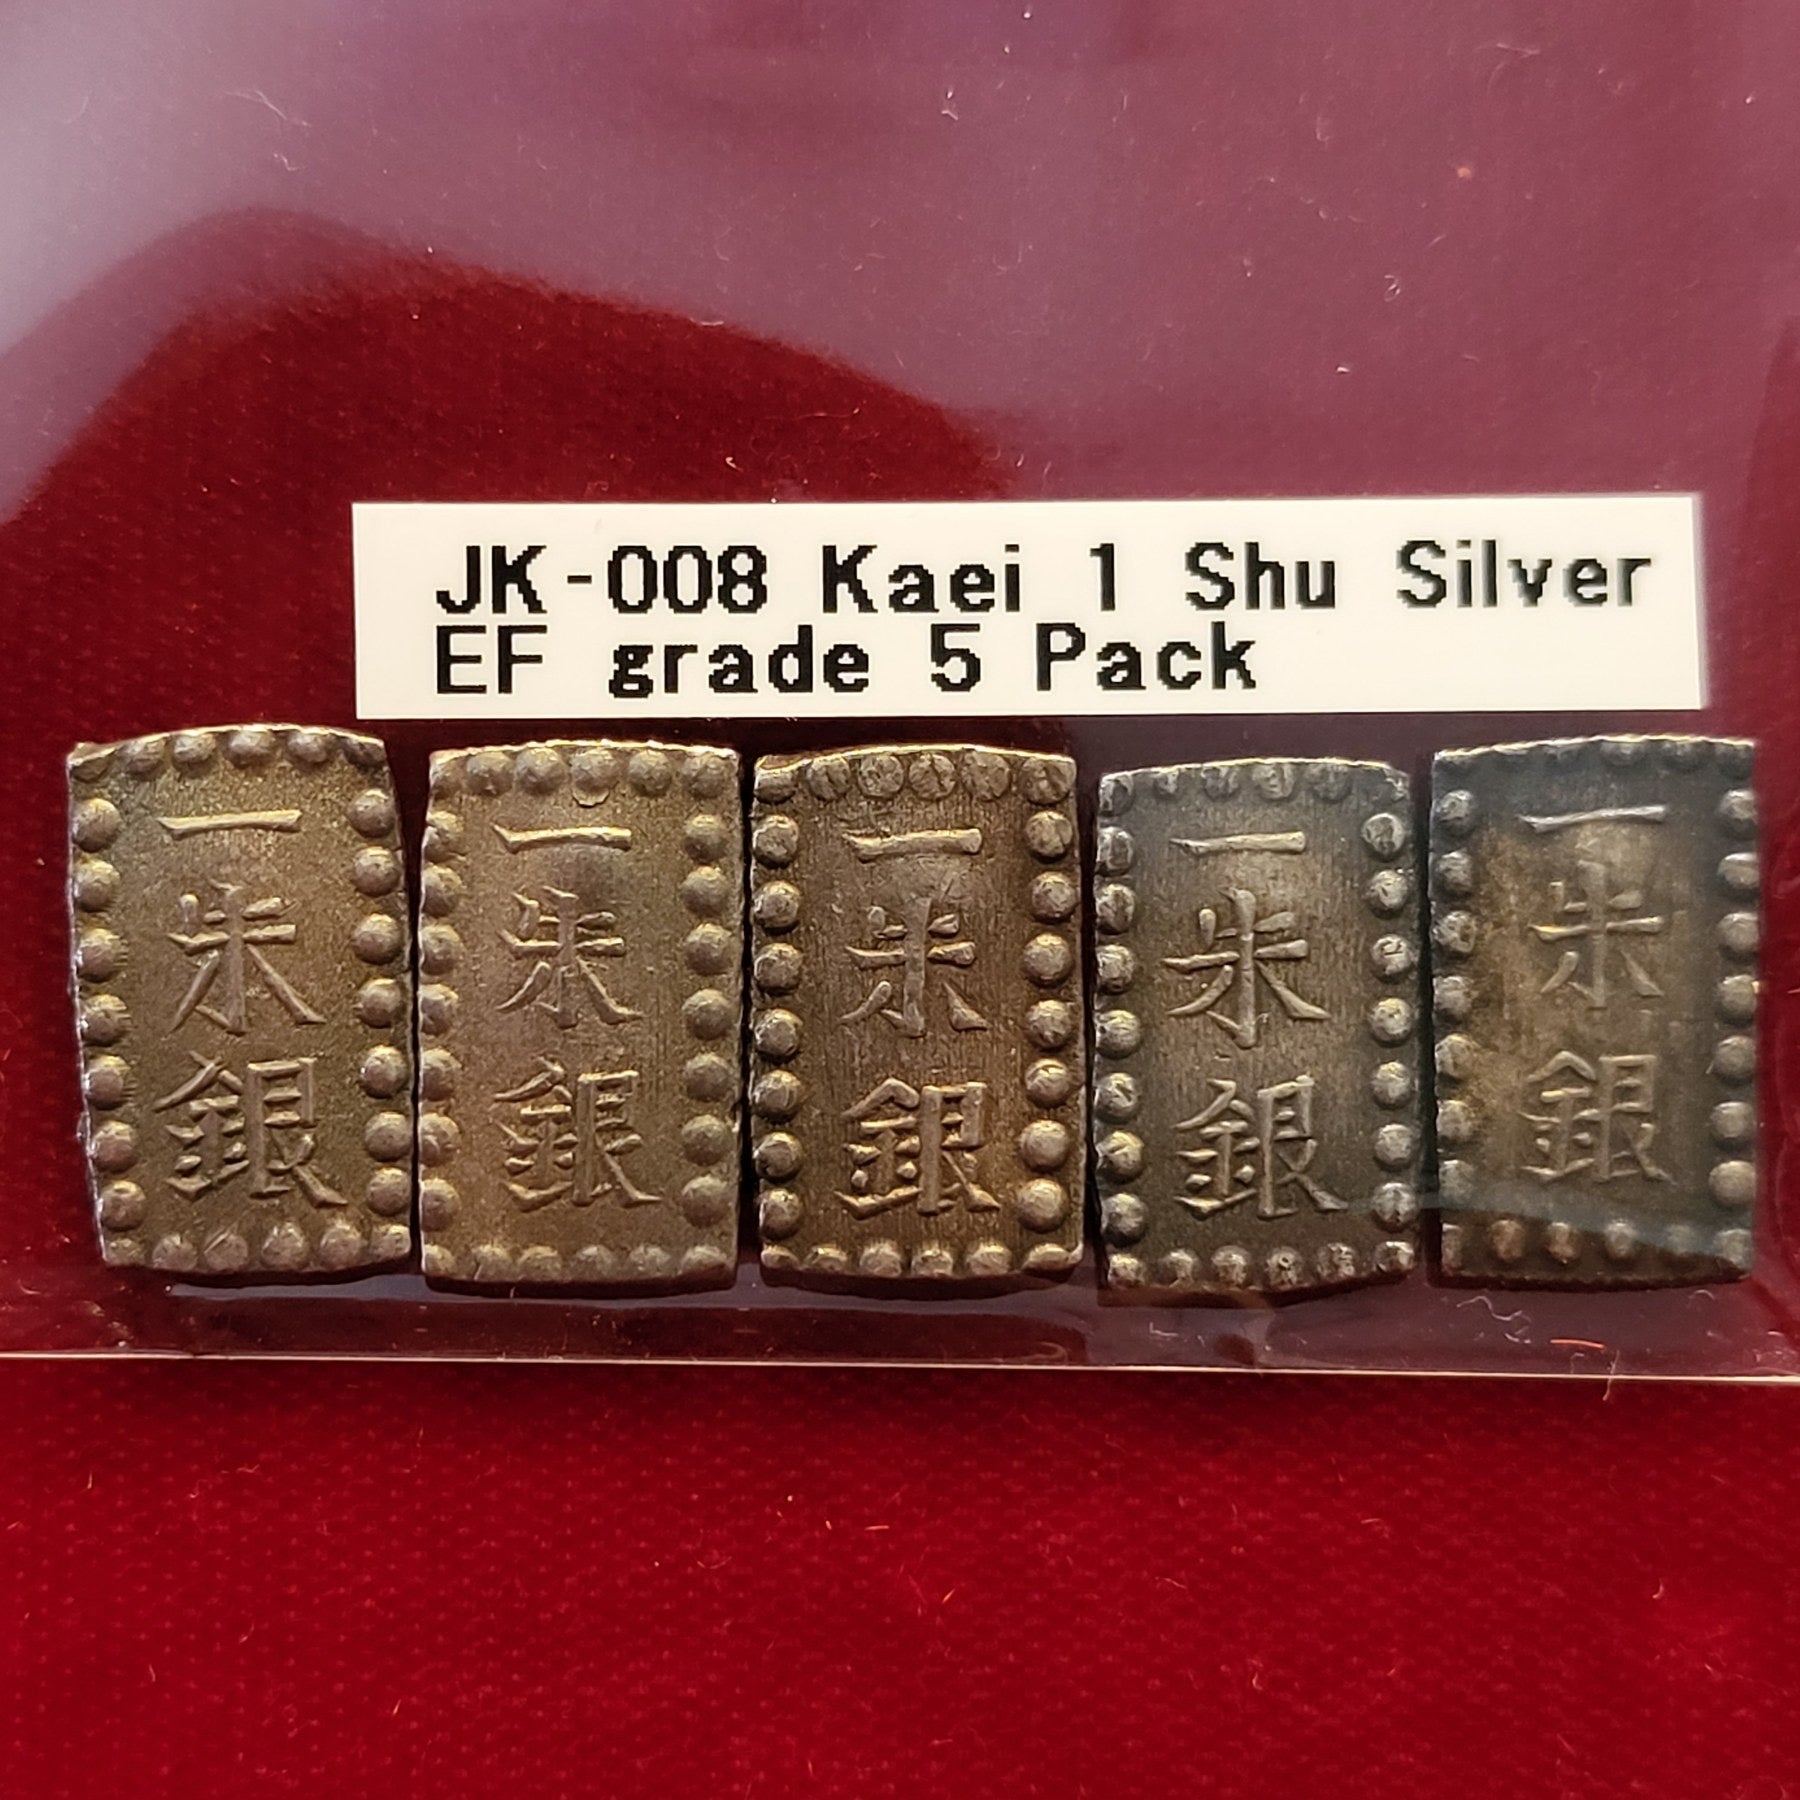 Kaei 1 Shu Silver EF grade 5 Pack